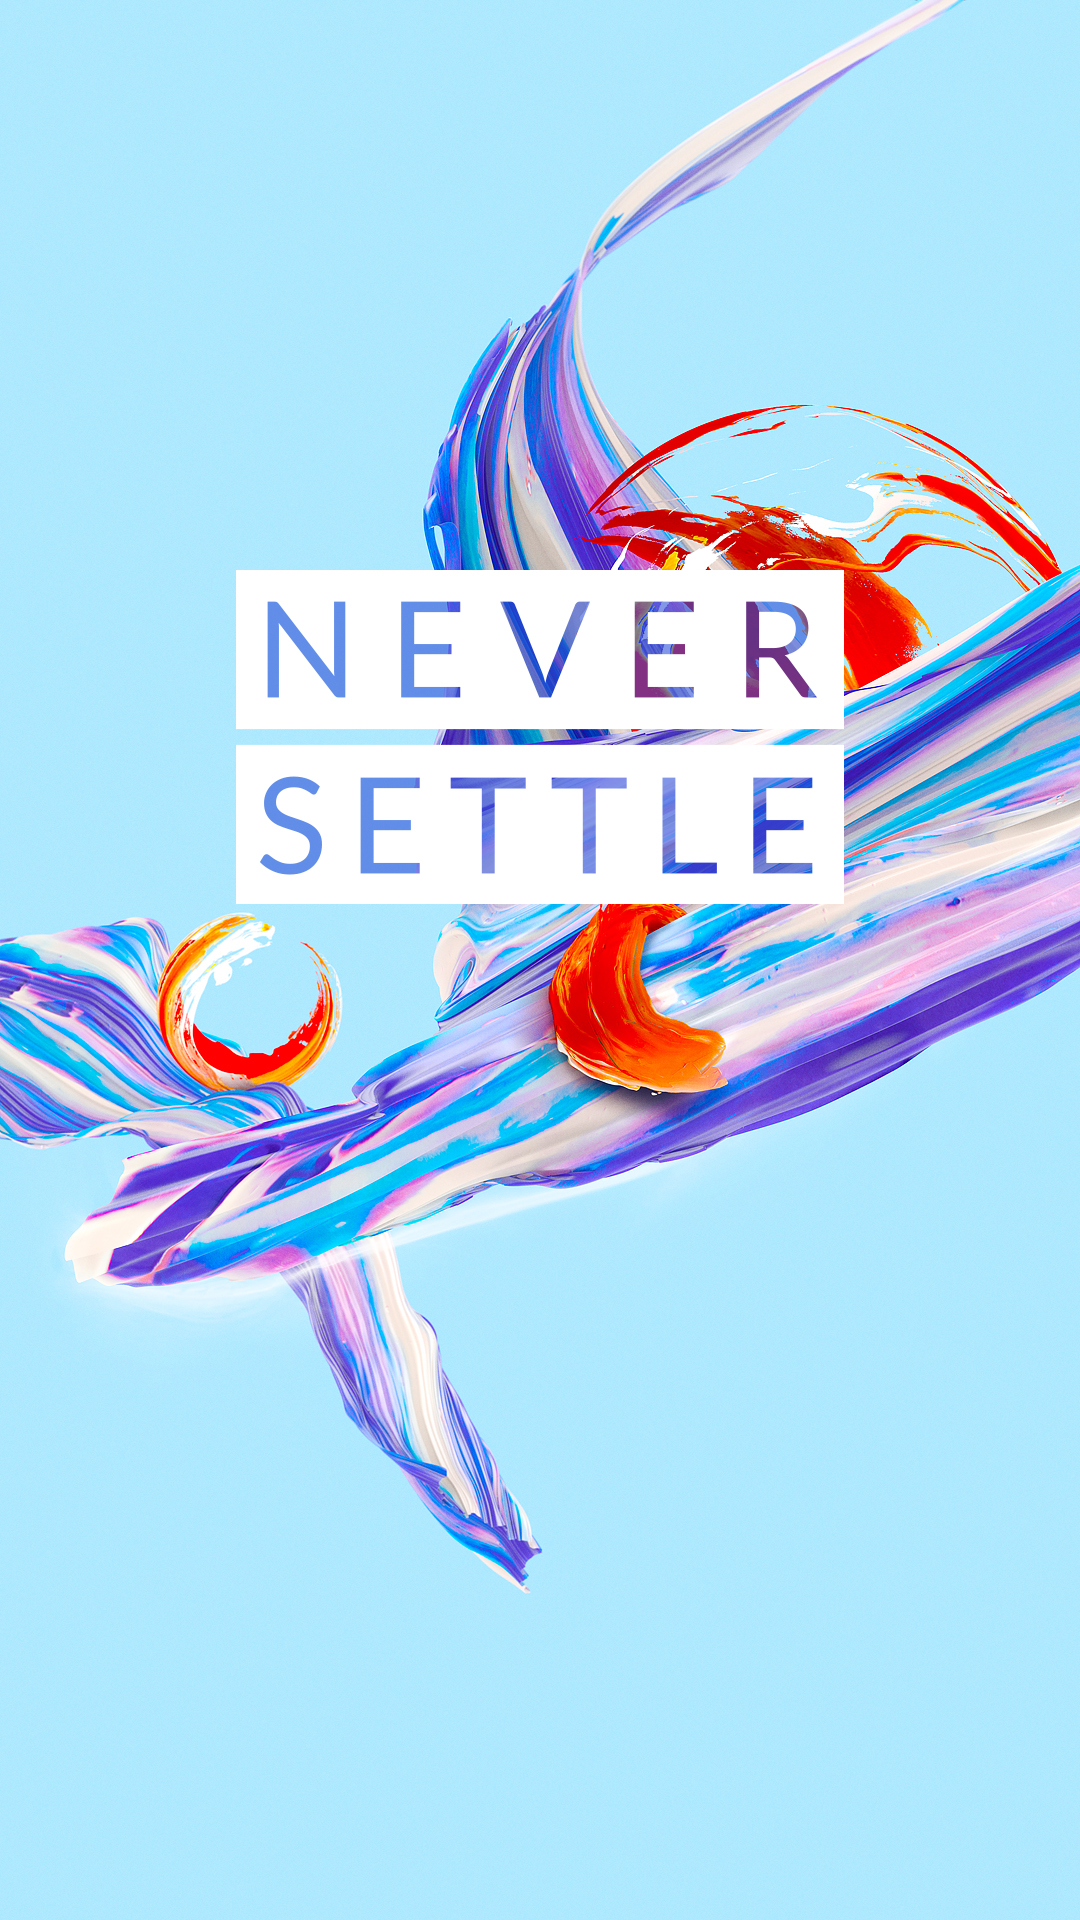 Never Settle Version - Oneplus 6 Wallpaper Hd Download , HD Wallpaper & Backgrounds